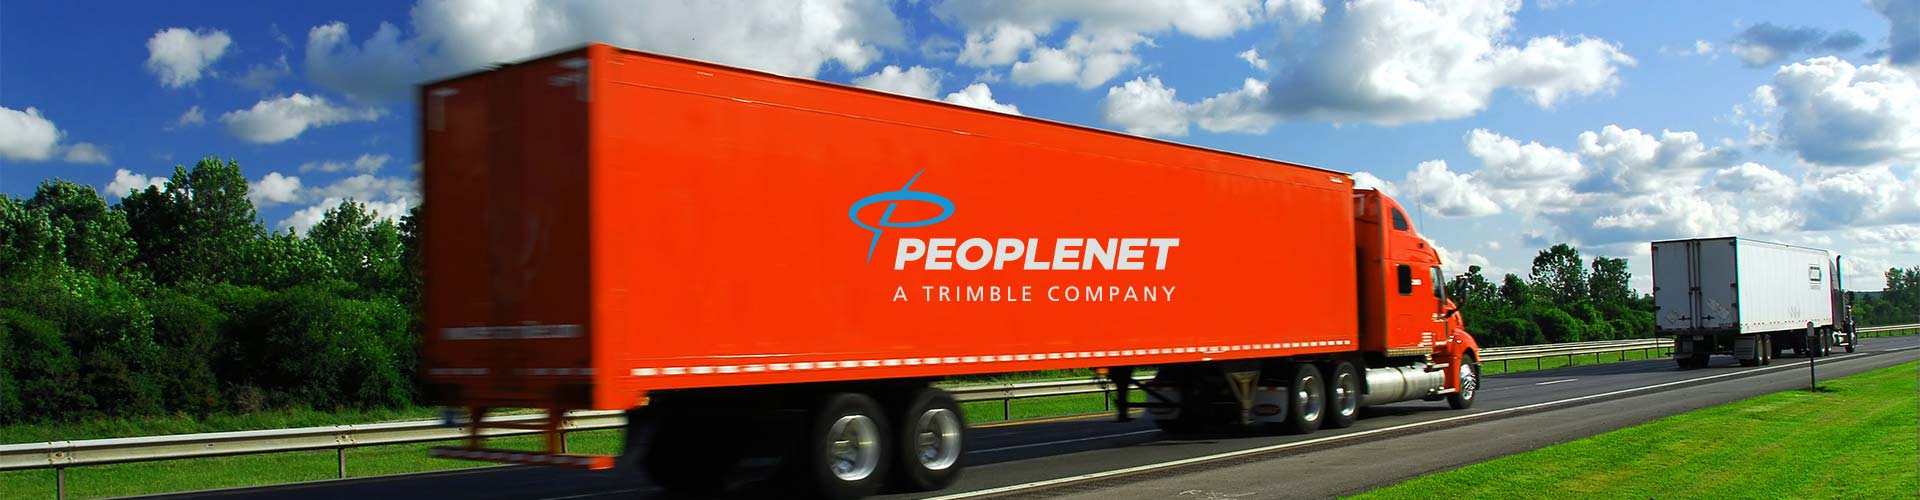 PeopleNet truck on highway